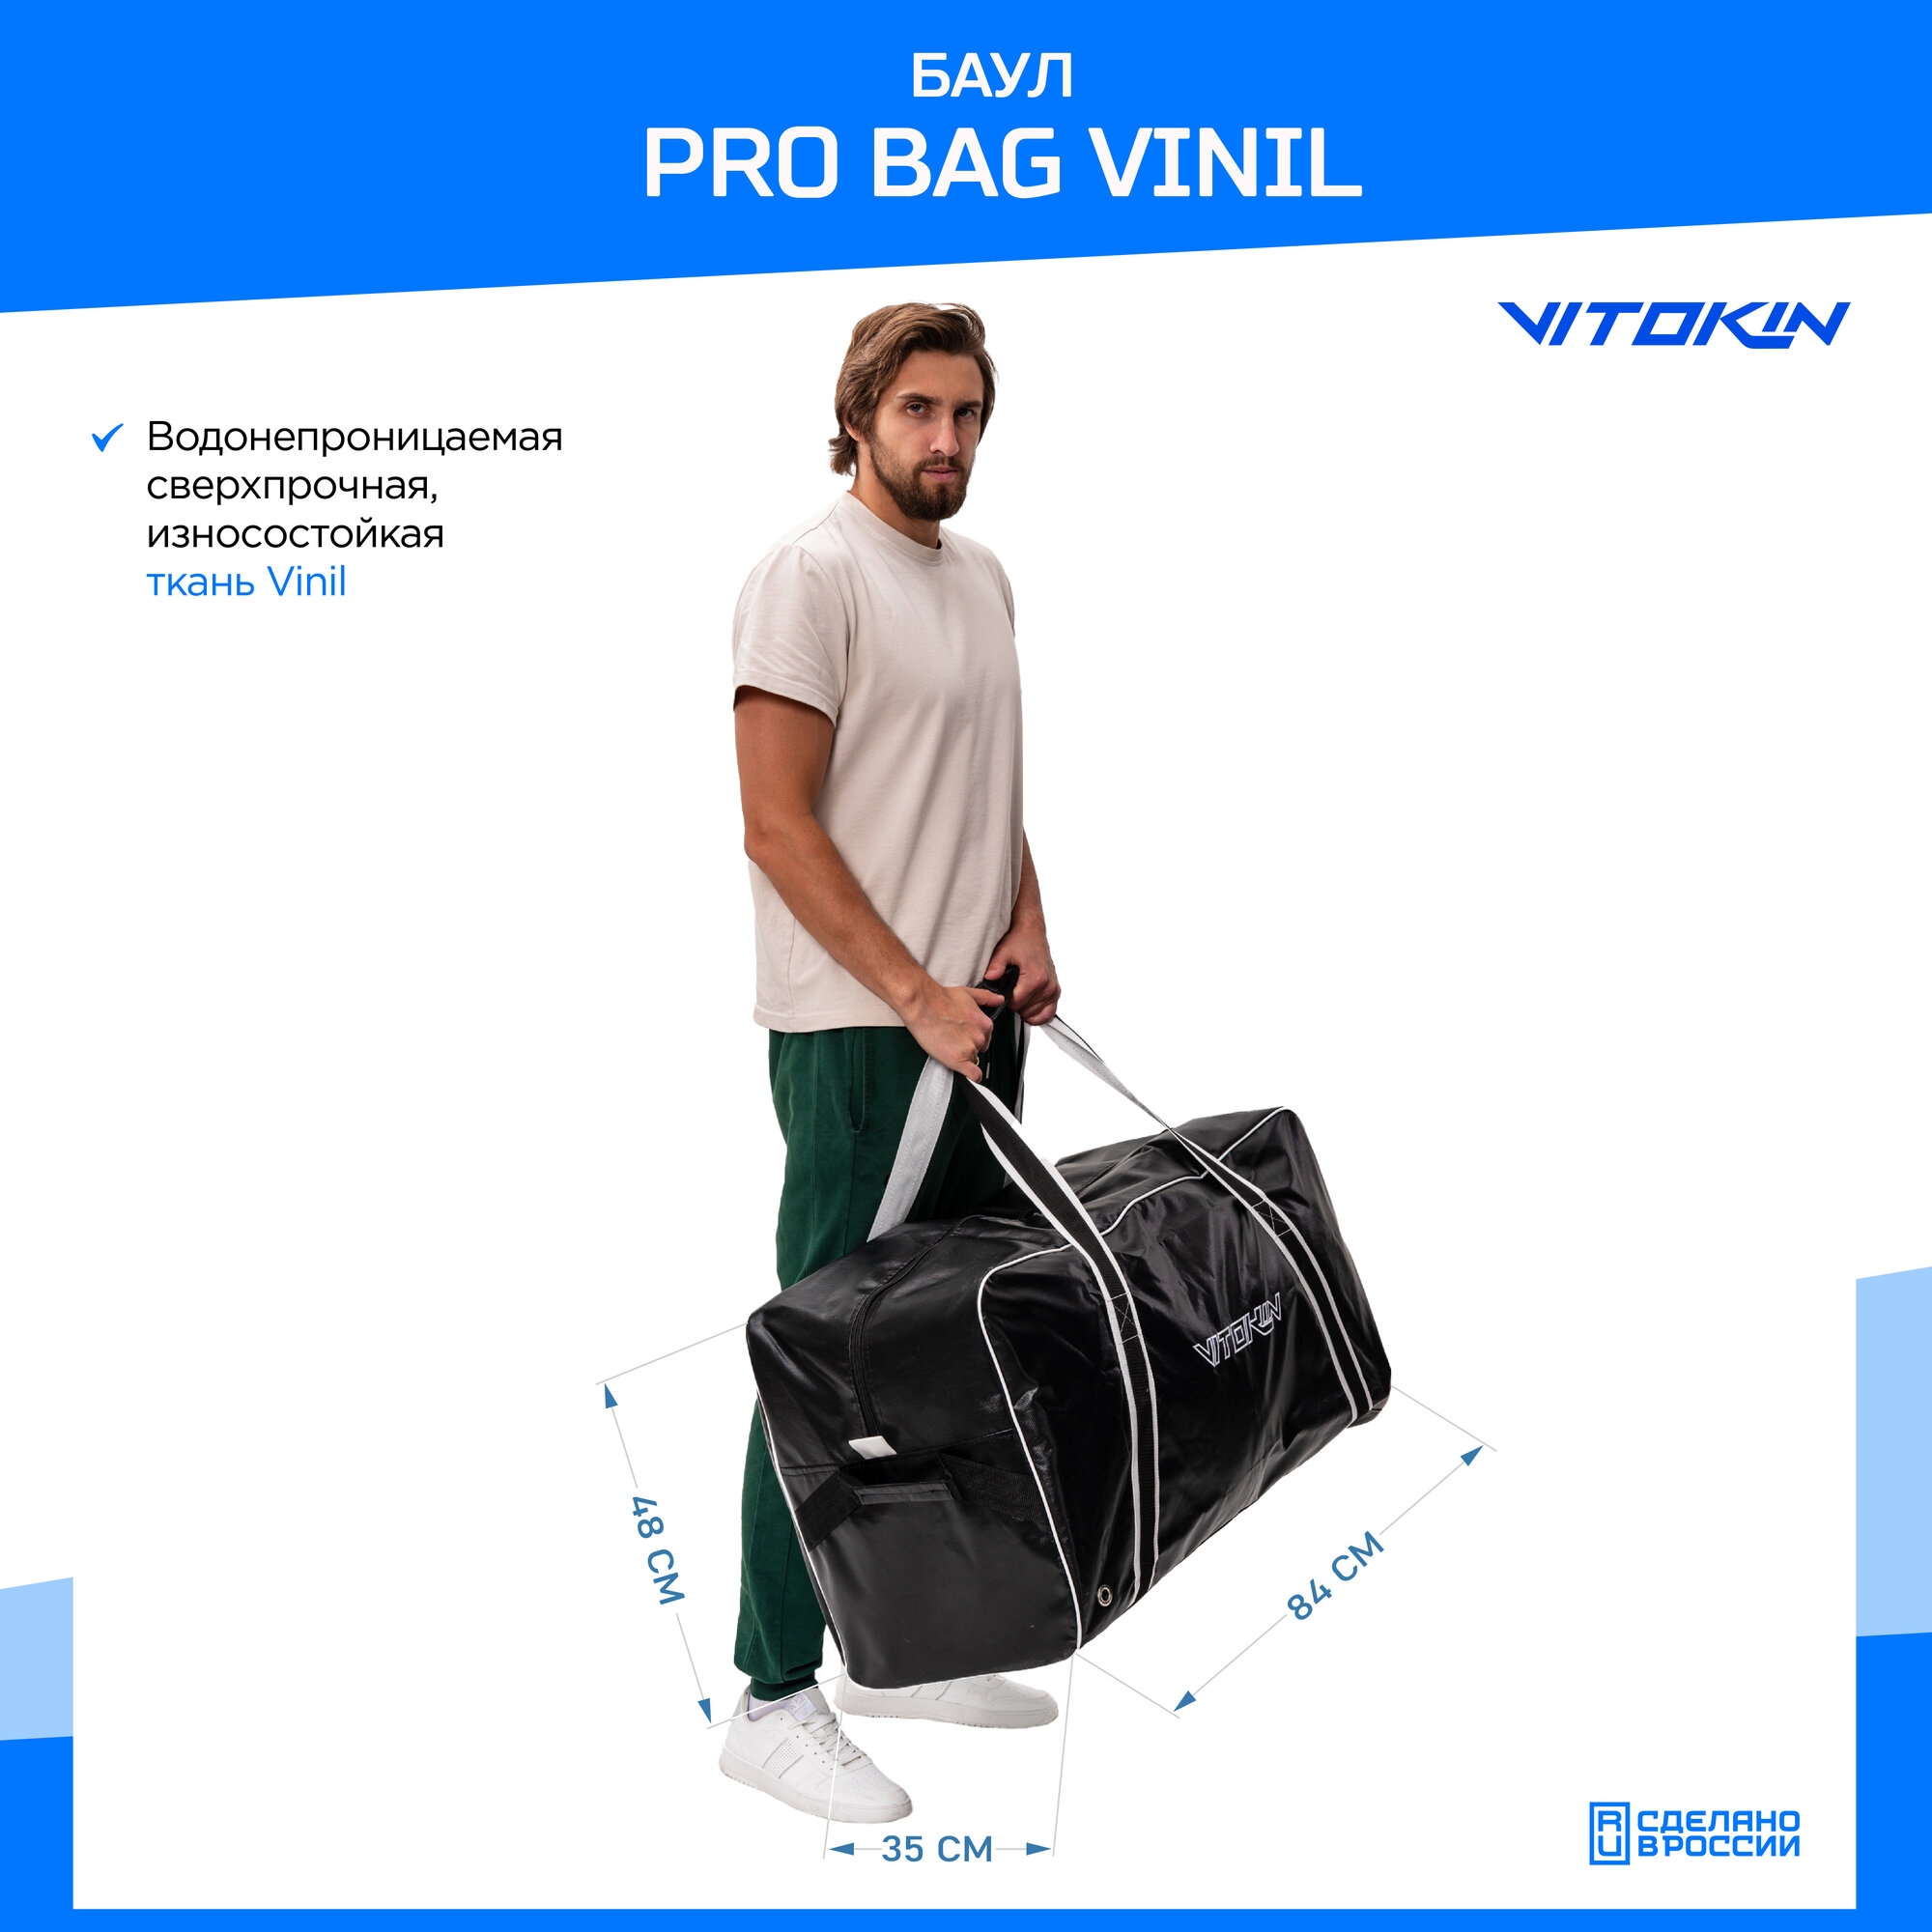 Баул хоккейный Pro Bag Vinil VITOKIN